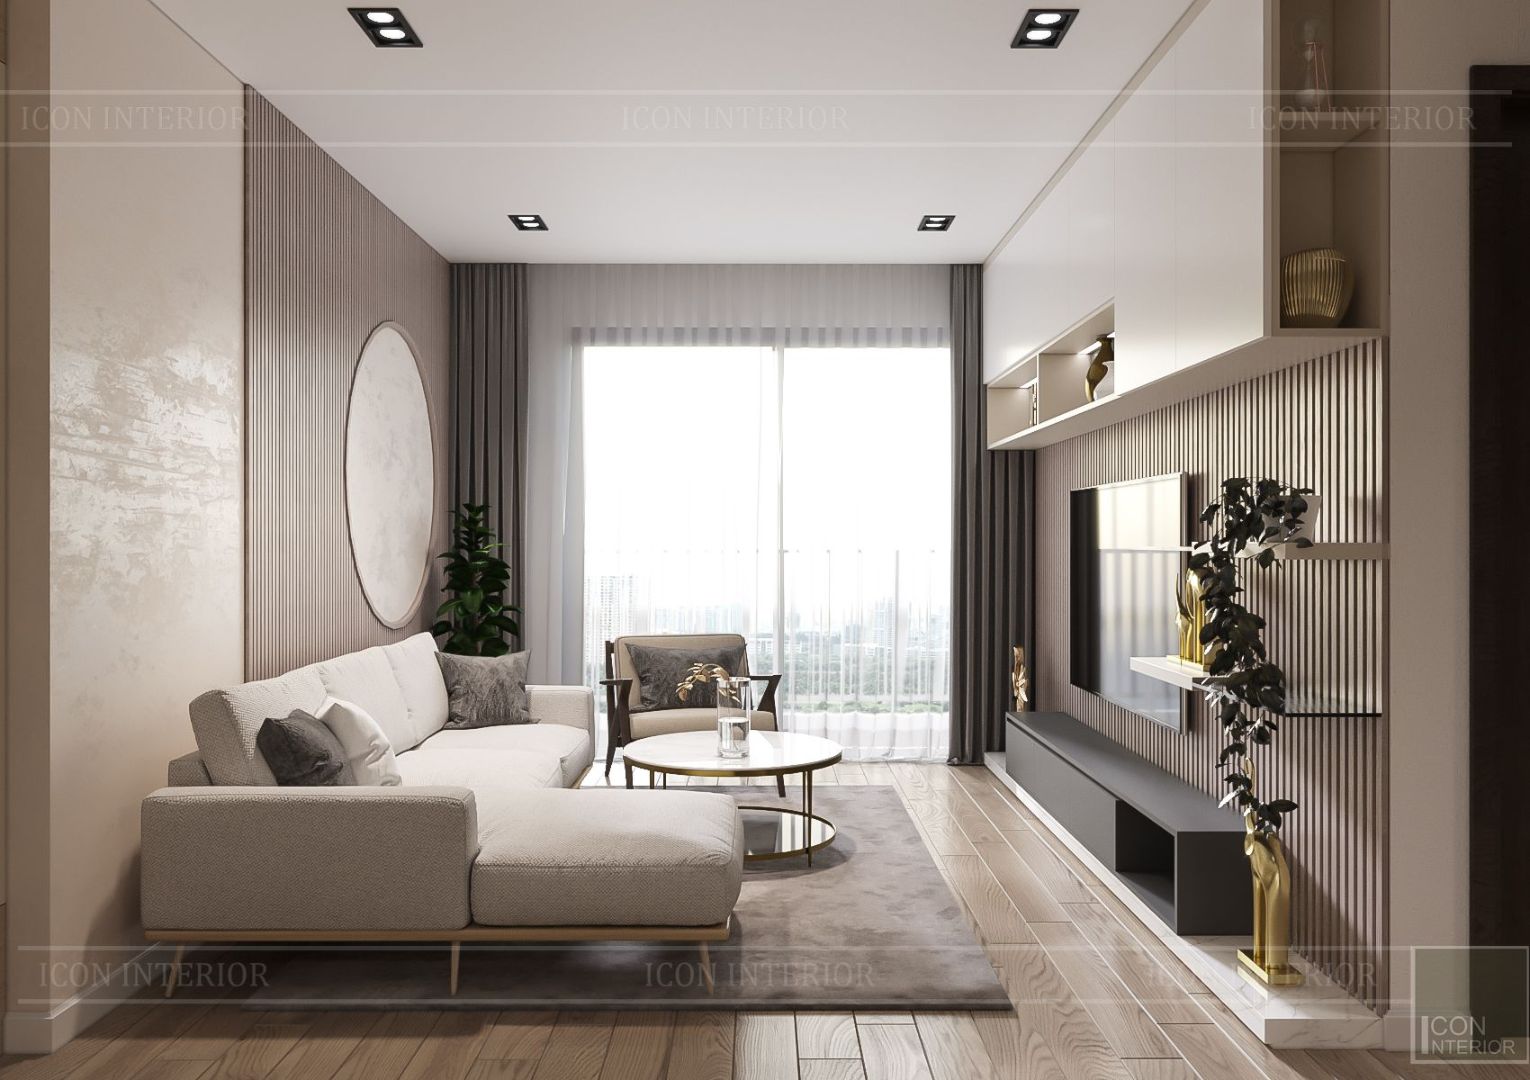 Renting a 2-bedroom flat in B tower Udic Westlake, east-facing balcony, 84 sqr